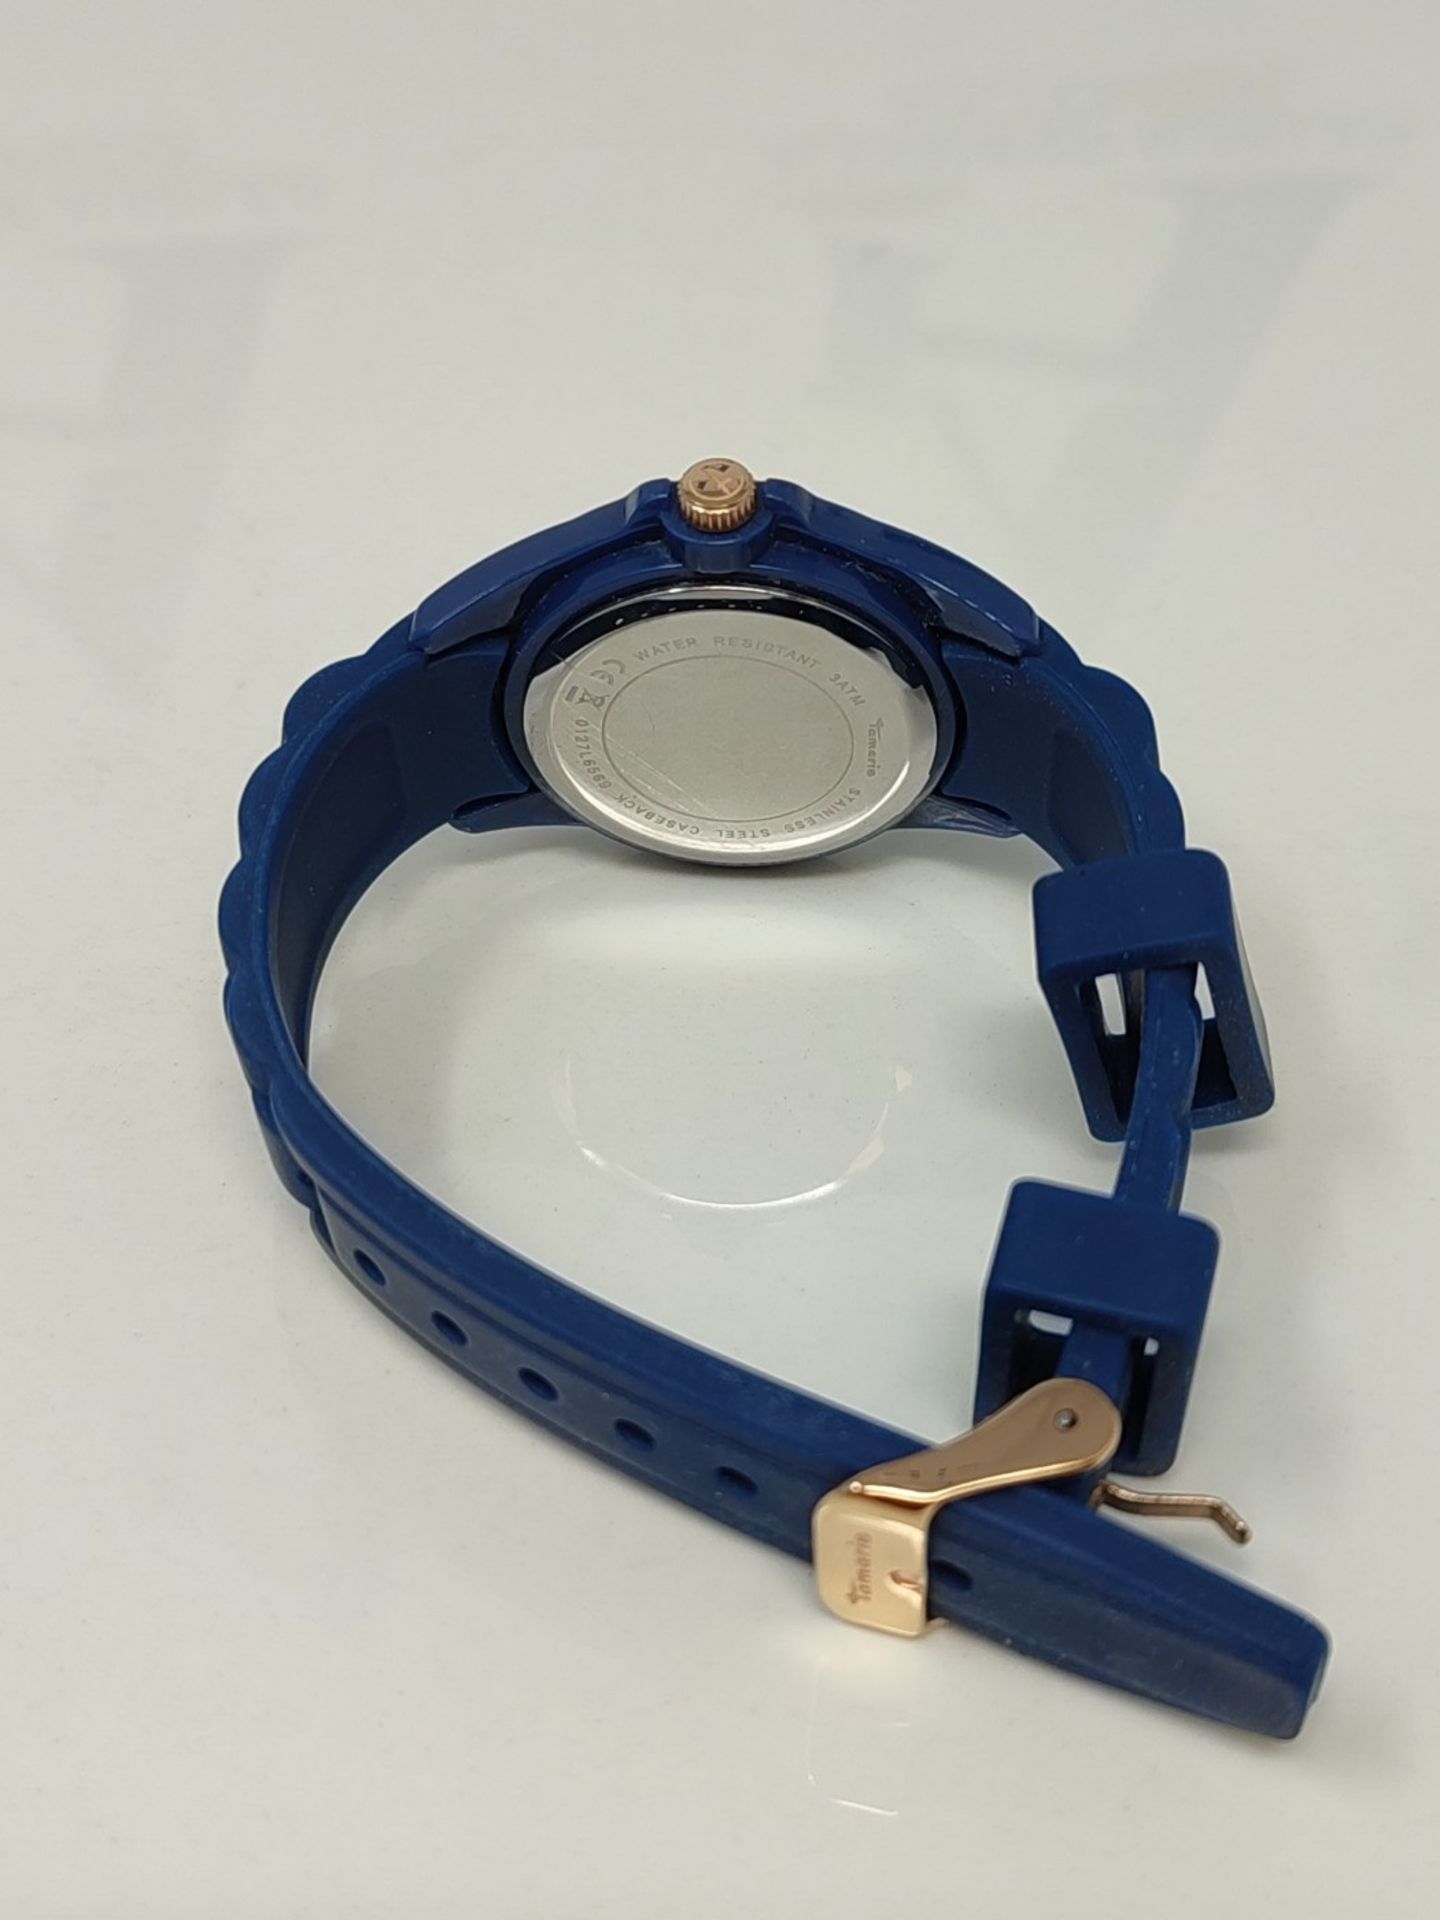 Tamaris Women's Analog Quartz Watch with Silicone Strap TT-0127-PQ, Dark Blue - Image 3 of 3